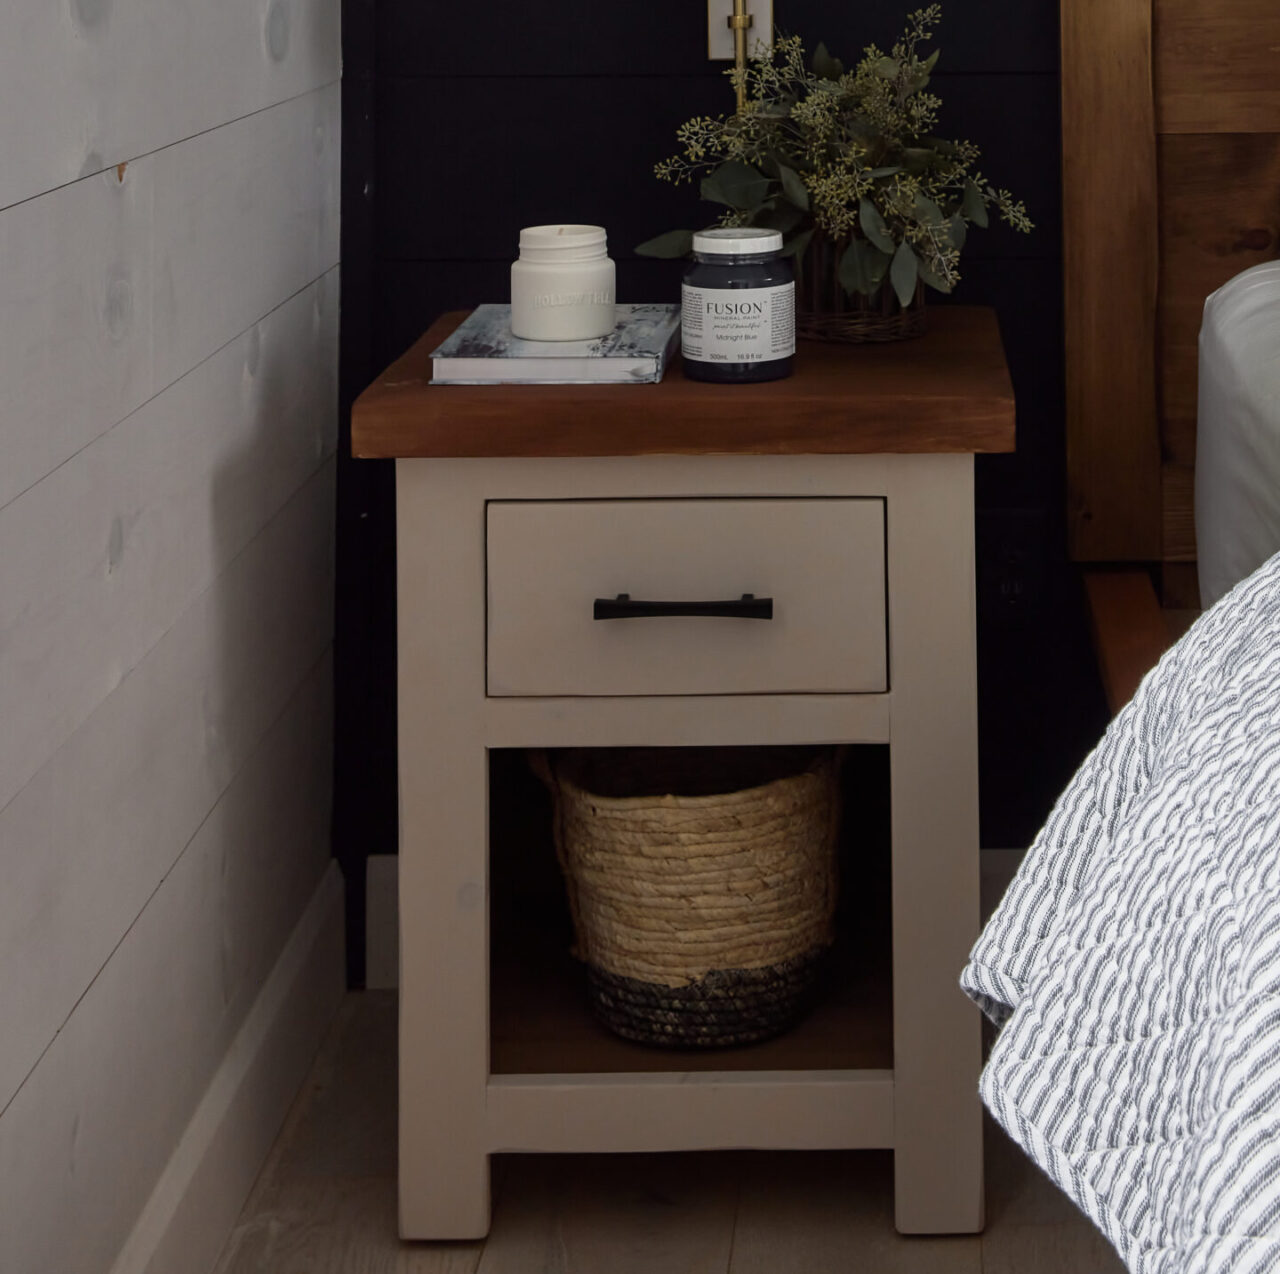 cottage makeover series / staged bedside table and bedframe